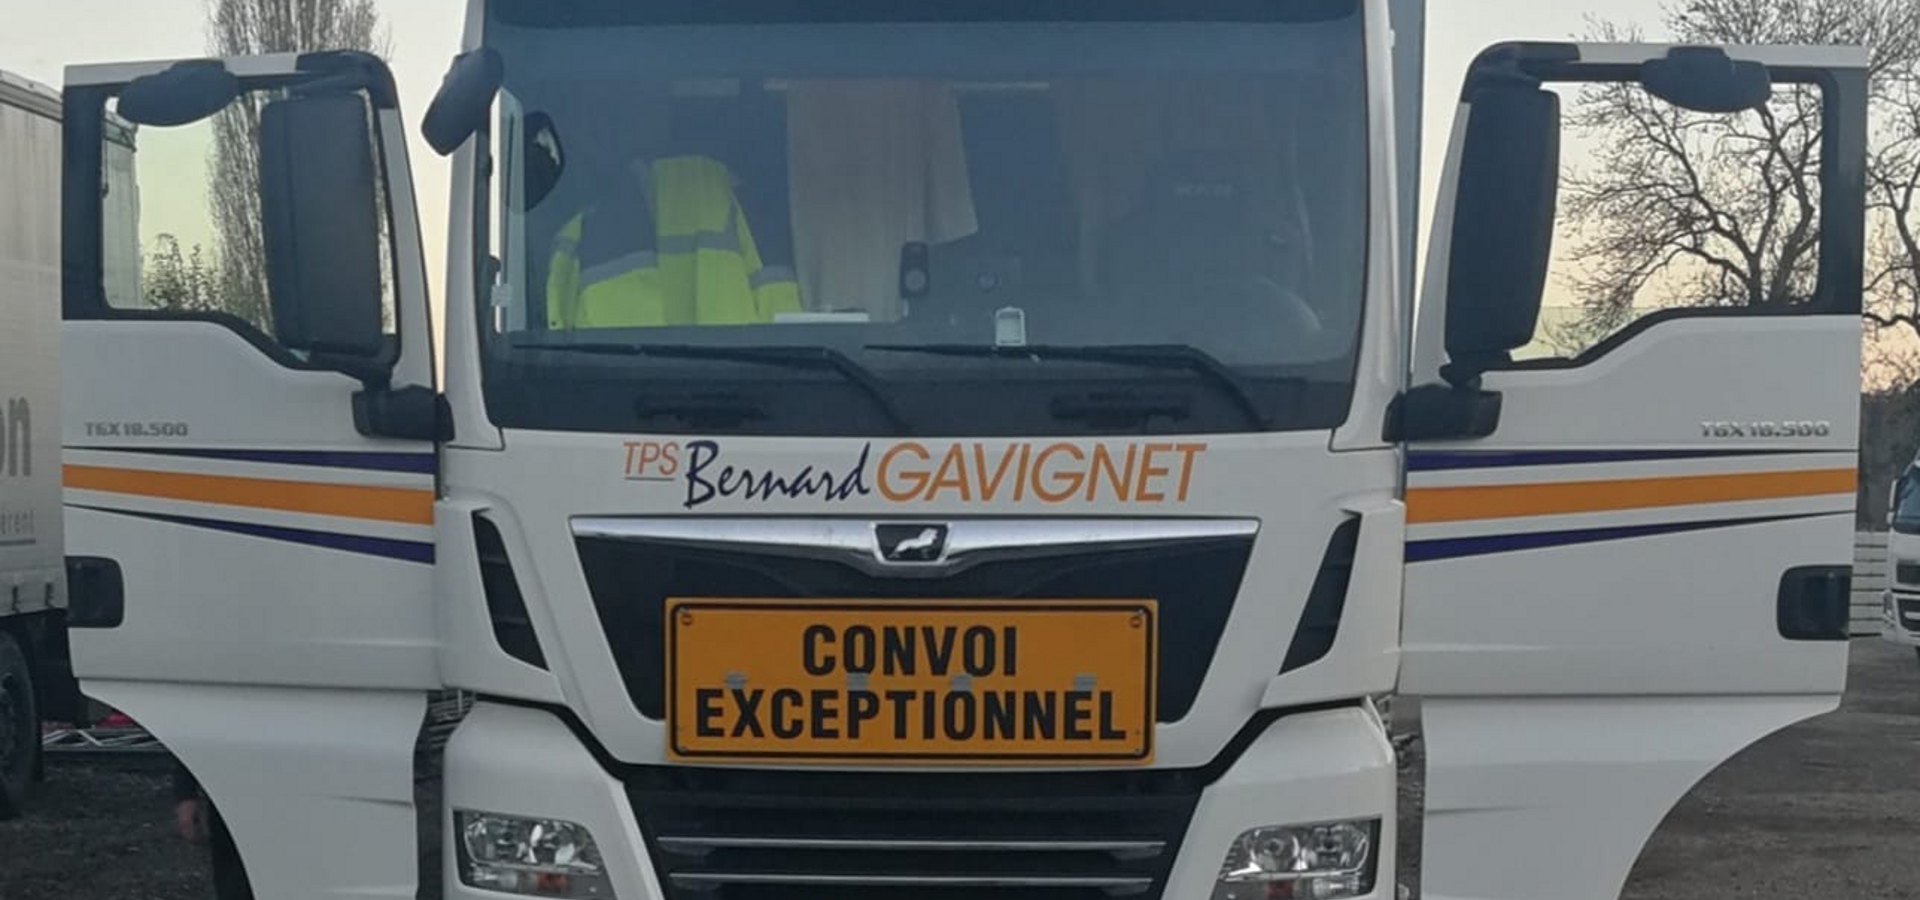 Transports Bernard Gavignet spécialiste du transport exceptionnel